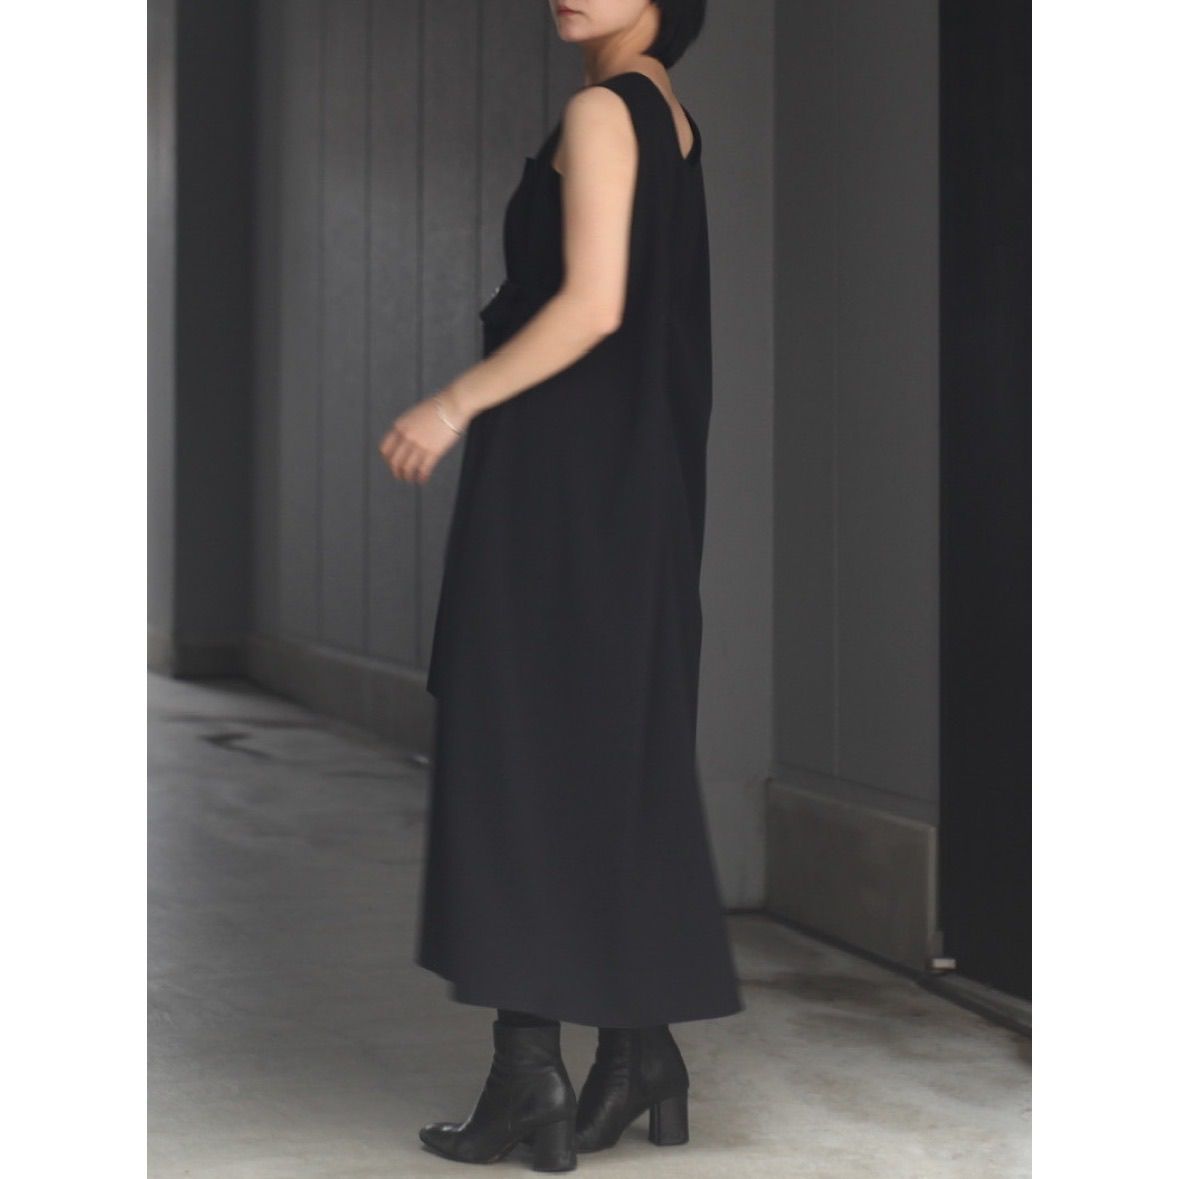 YOHEI OHNO - 【残りわずか】Mantle Dress | ACRMTSM ONLINE STORE